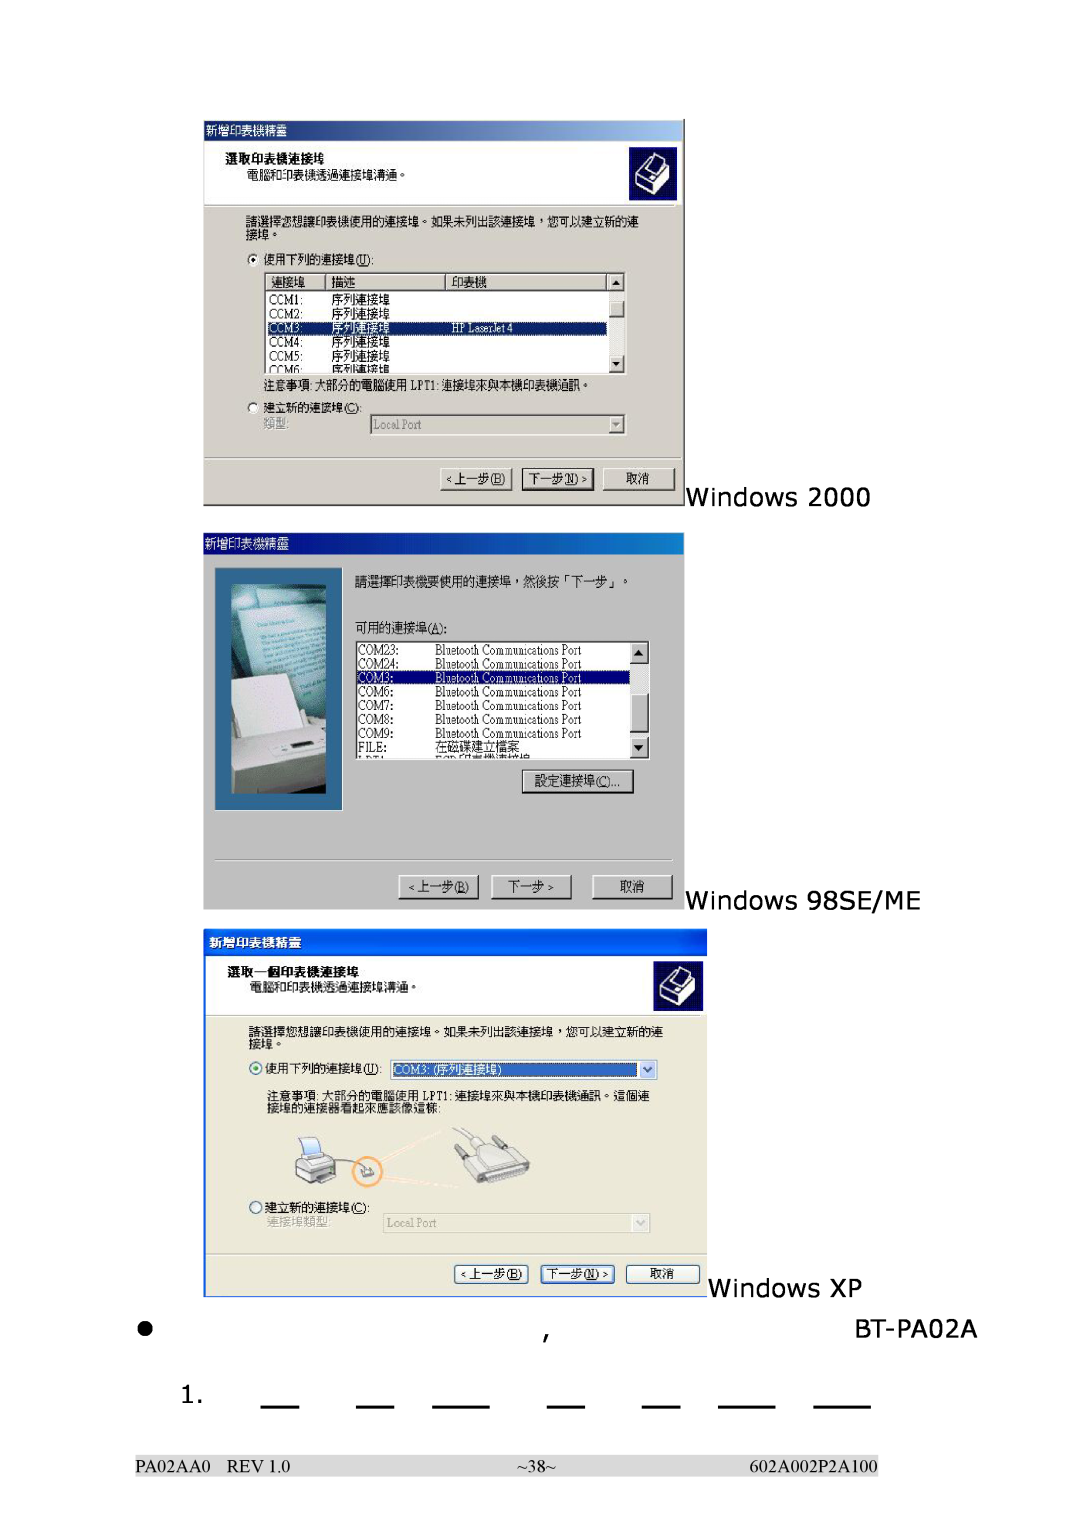 EPoX Computer BT-PA02A manual Windows Windows 98SE/ME Windows XP, PA02AA0 REV, ~38~, 602A002P2A100 